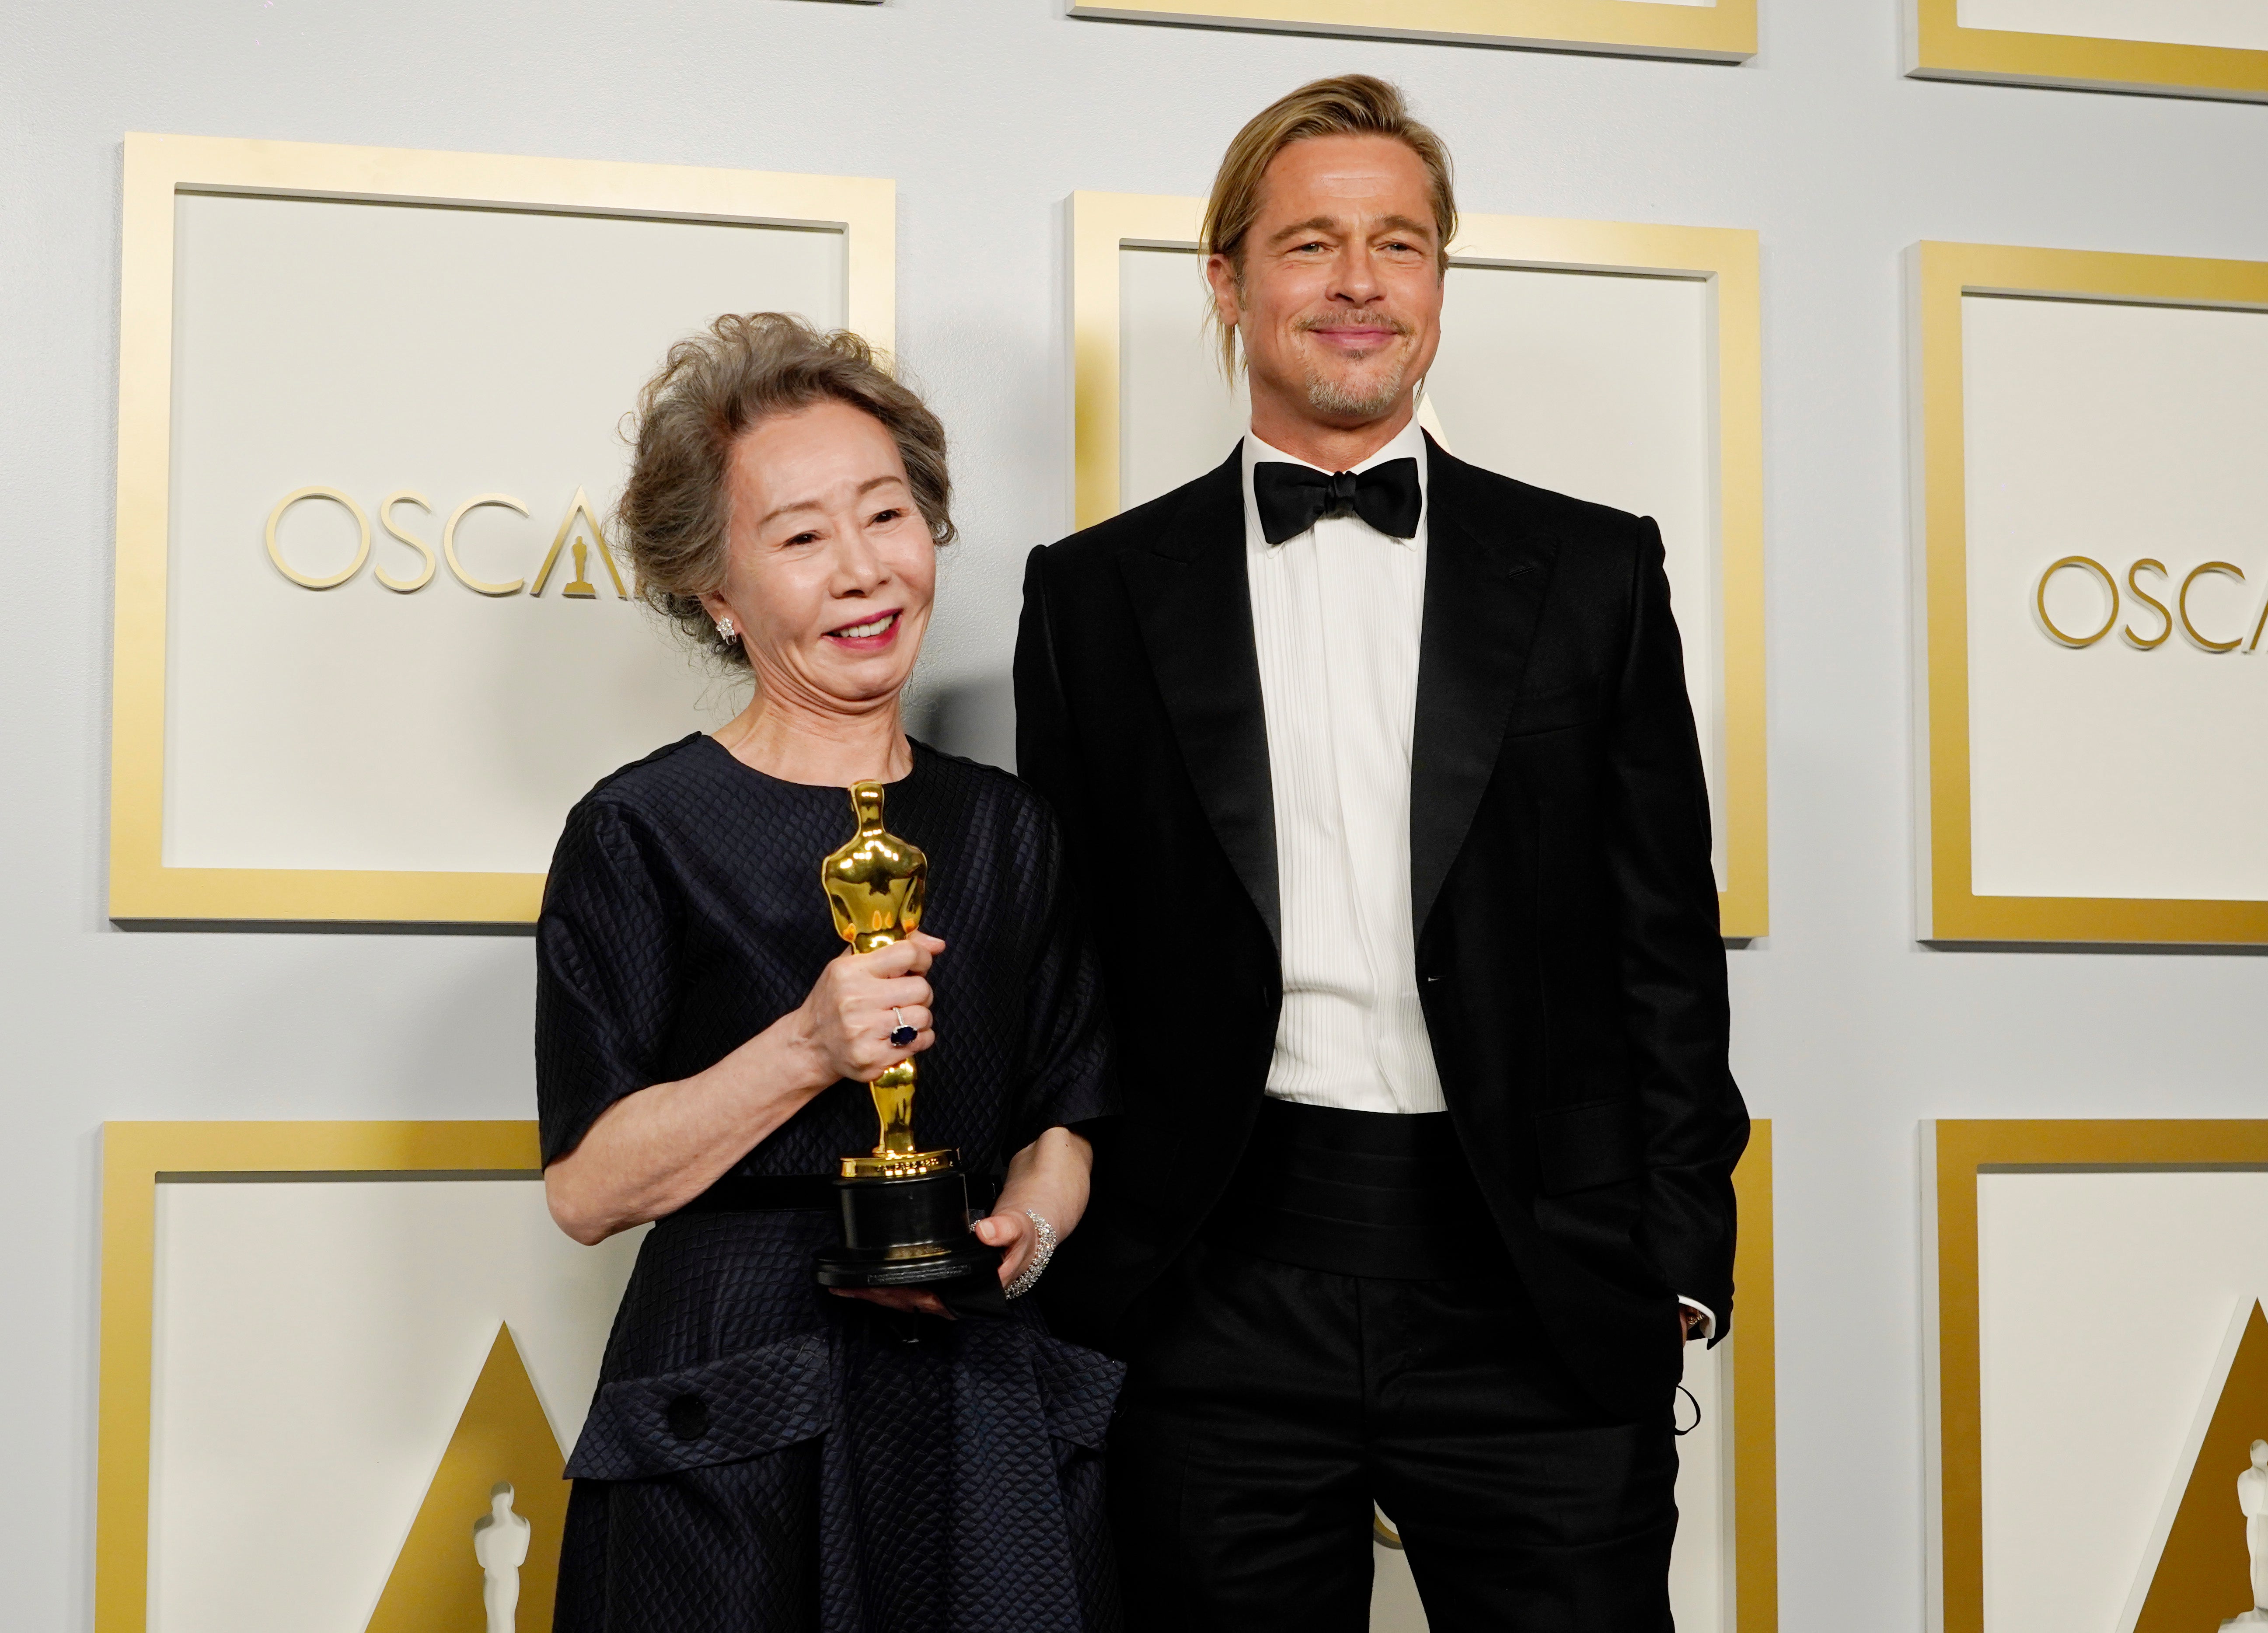 Oscars 2021: Full list of winners and nominees - CBS News